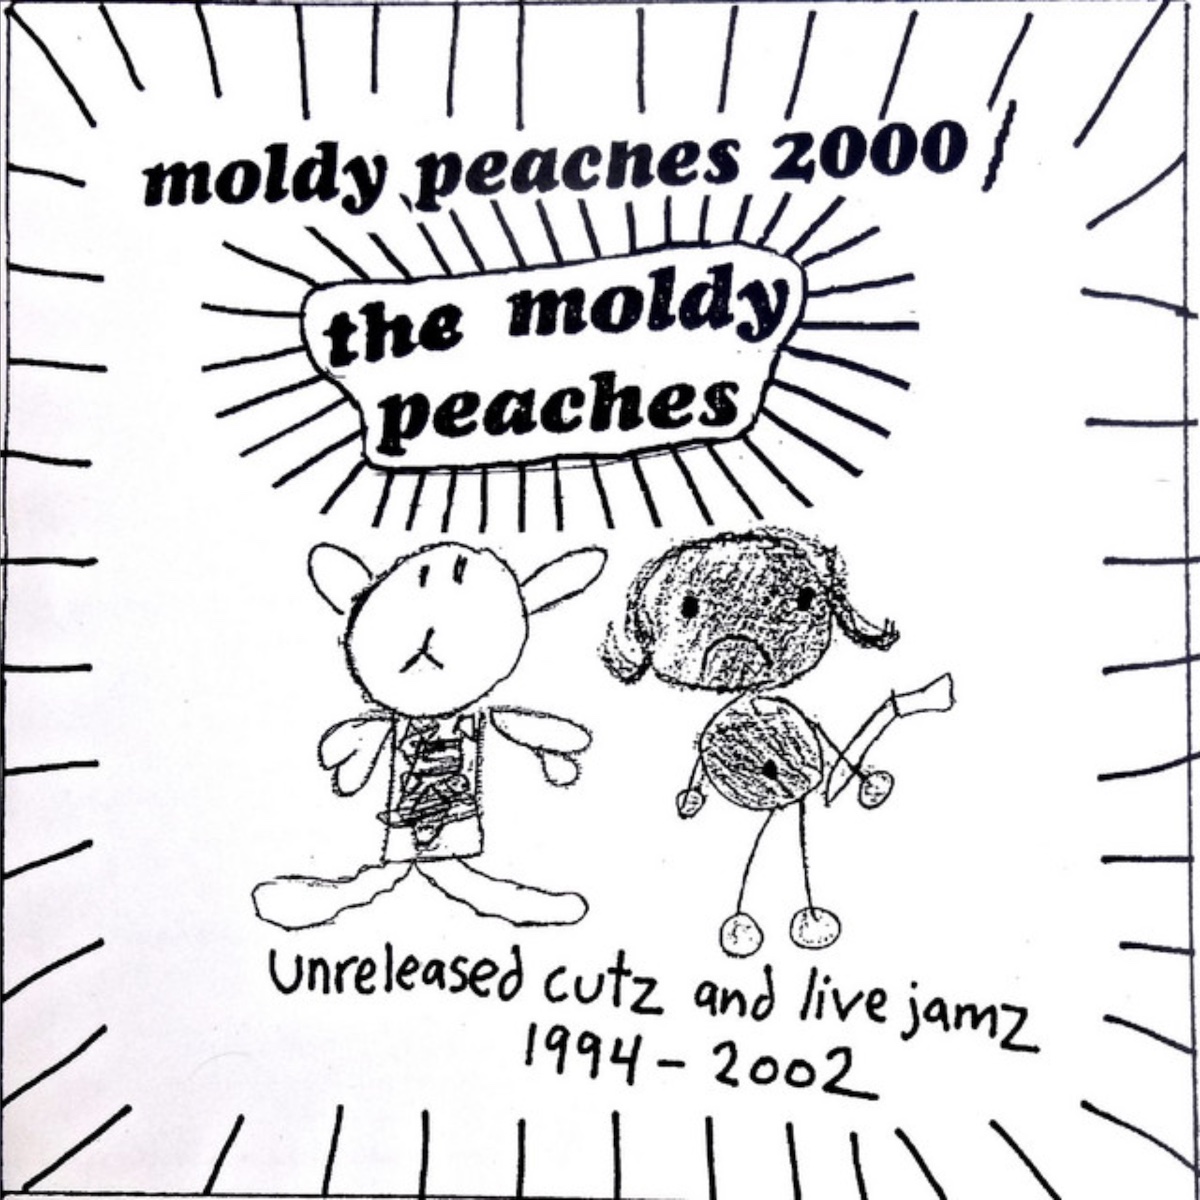 Peaches discography - Wikipedia